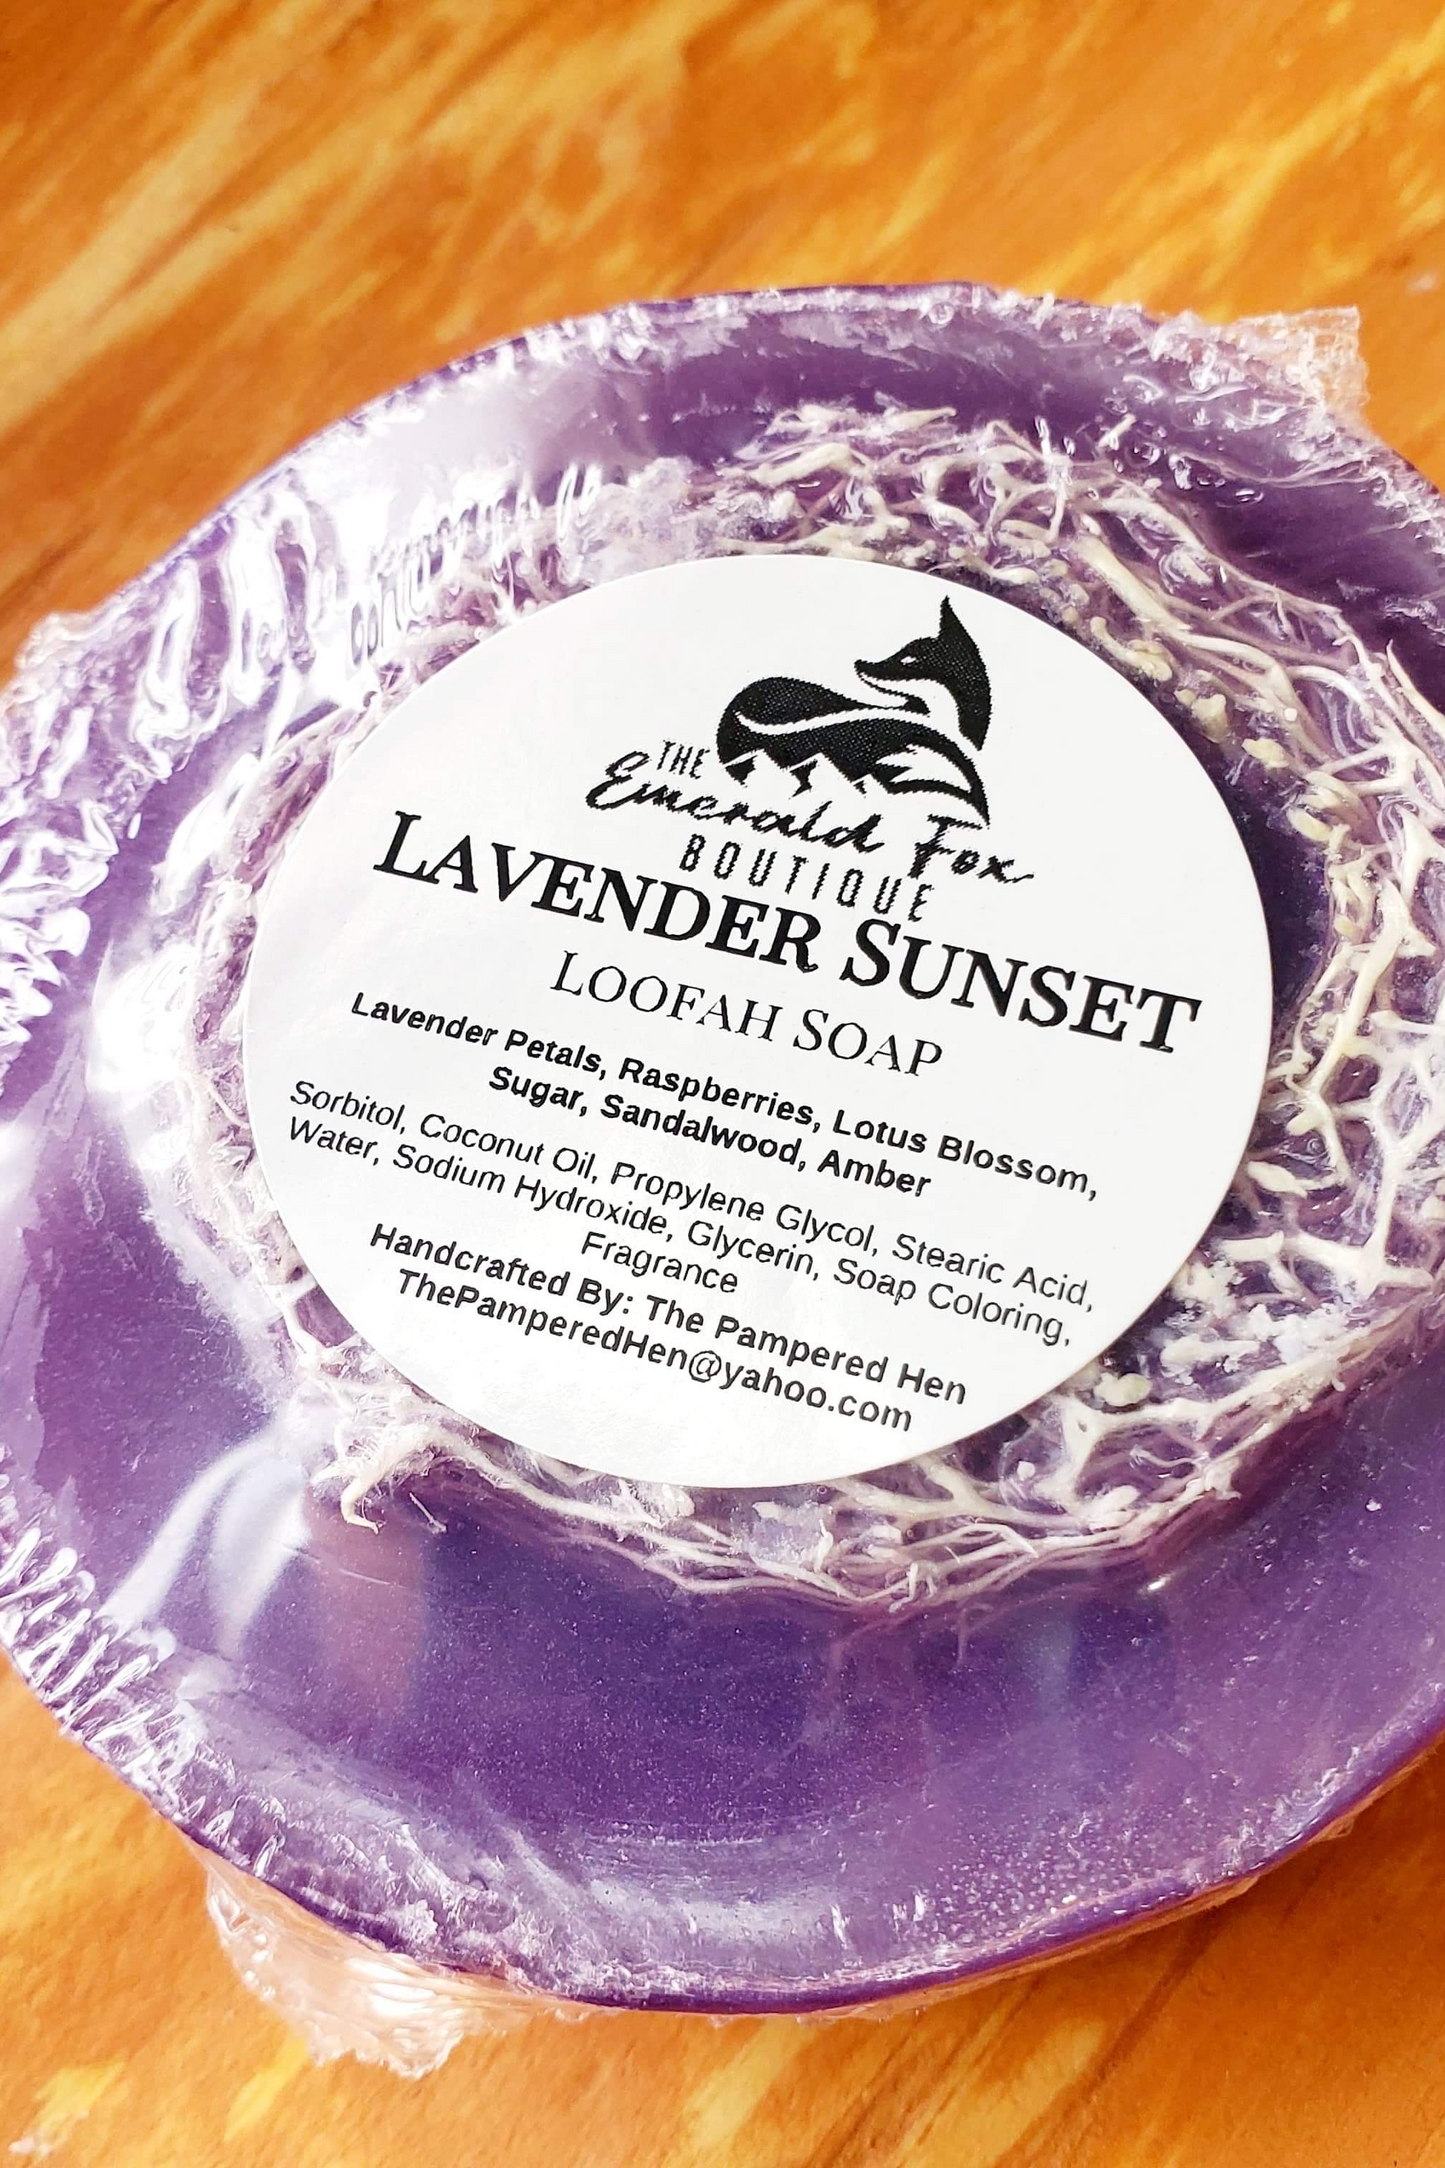 Lavender Sunset or Lemon Drop Loofah Soap.